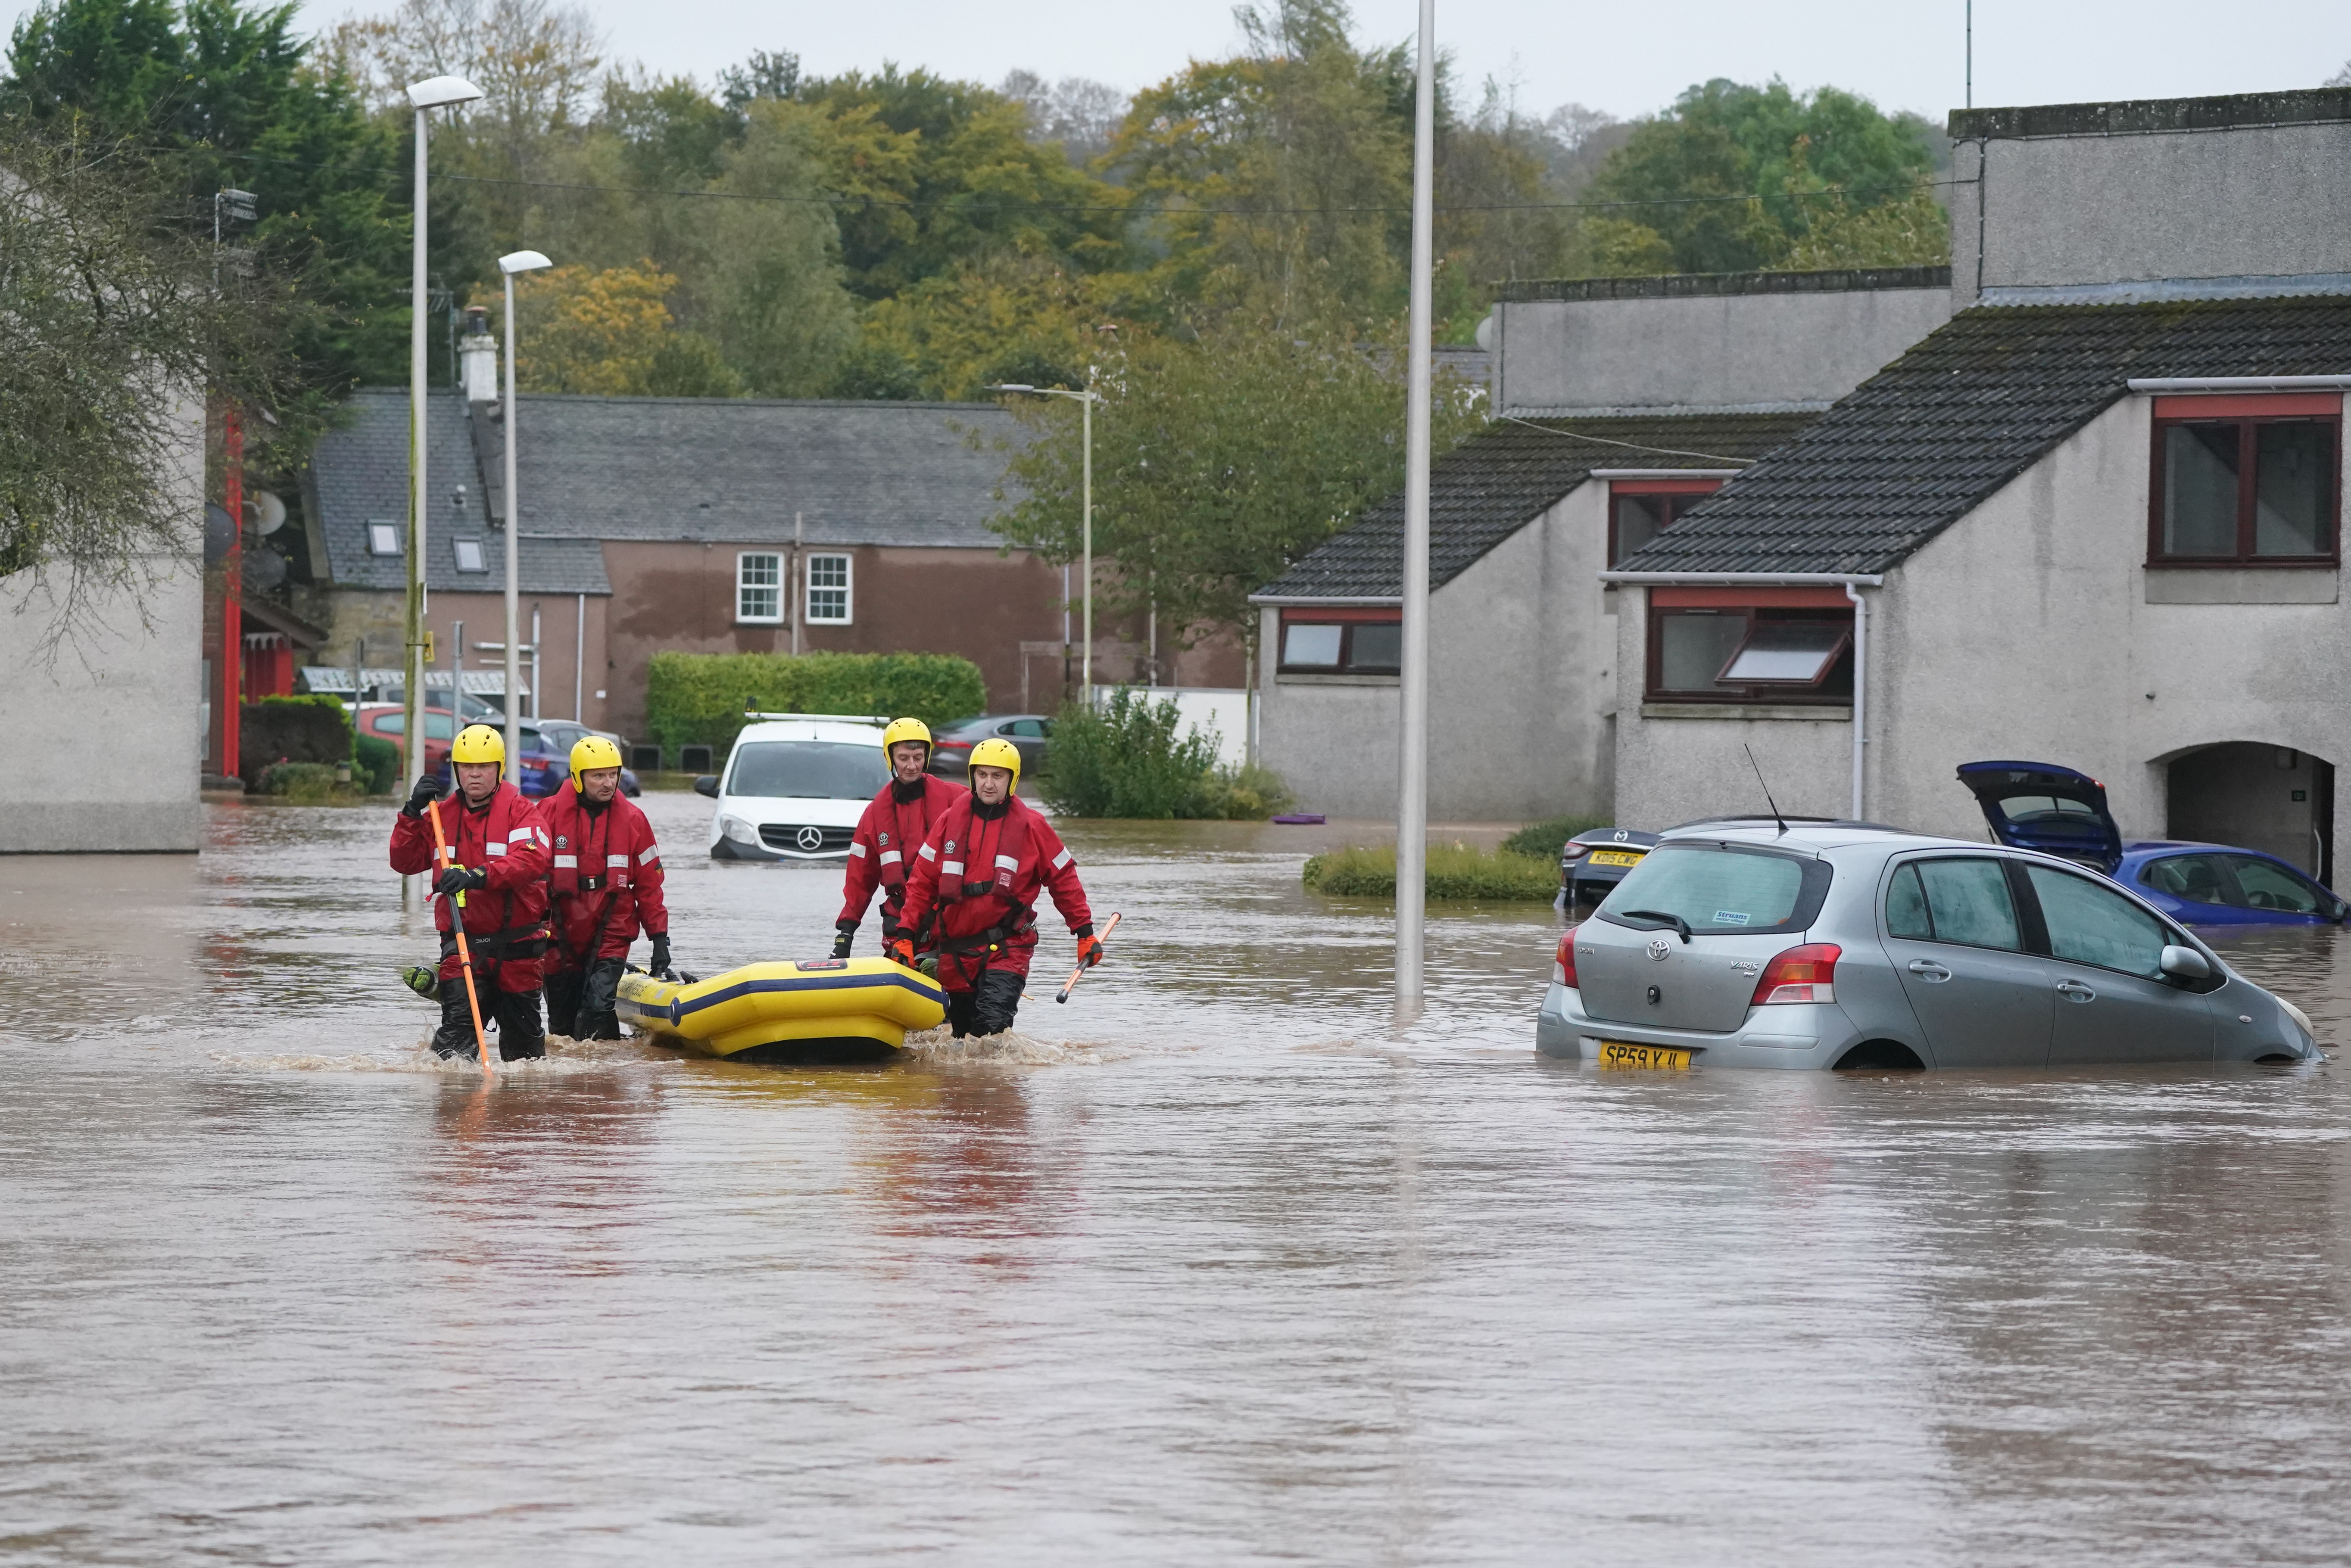 Members of a Coastguard Rescue Team in Brechin, Scotland